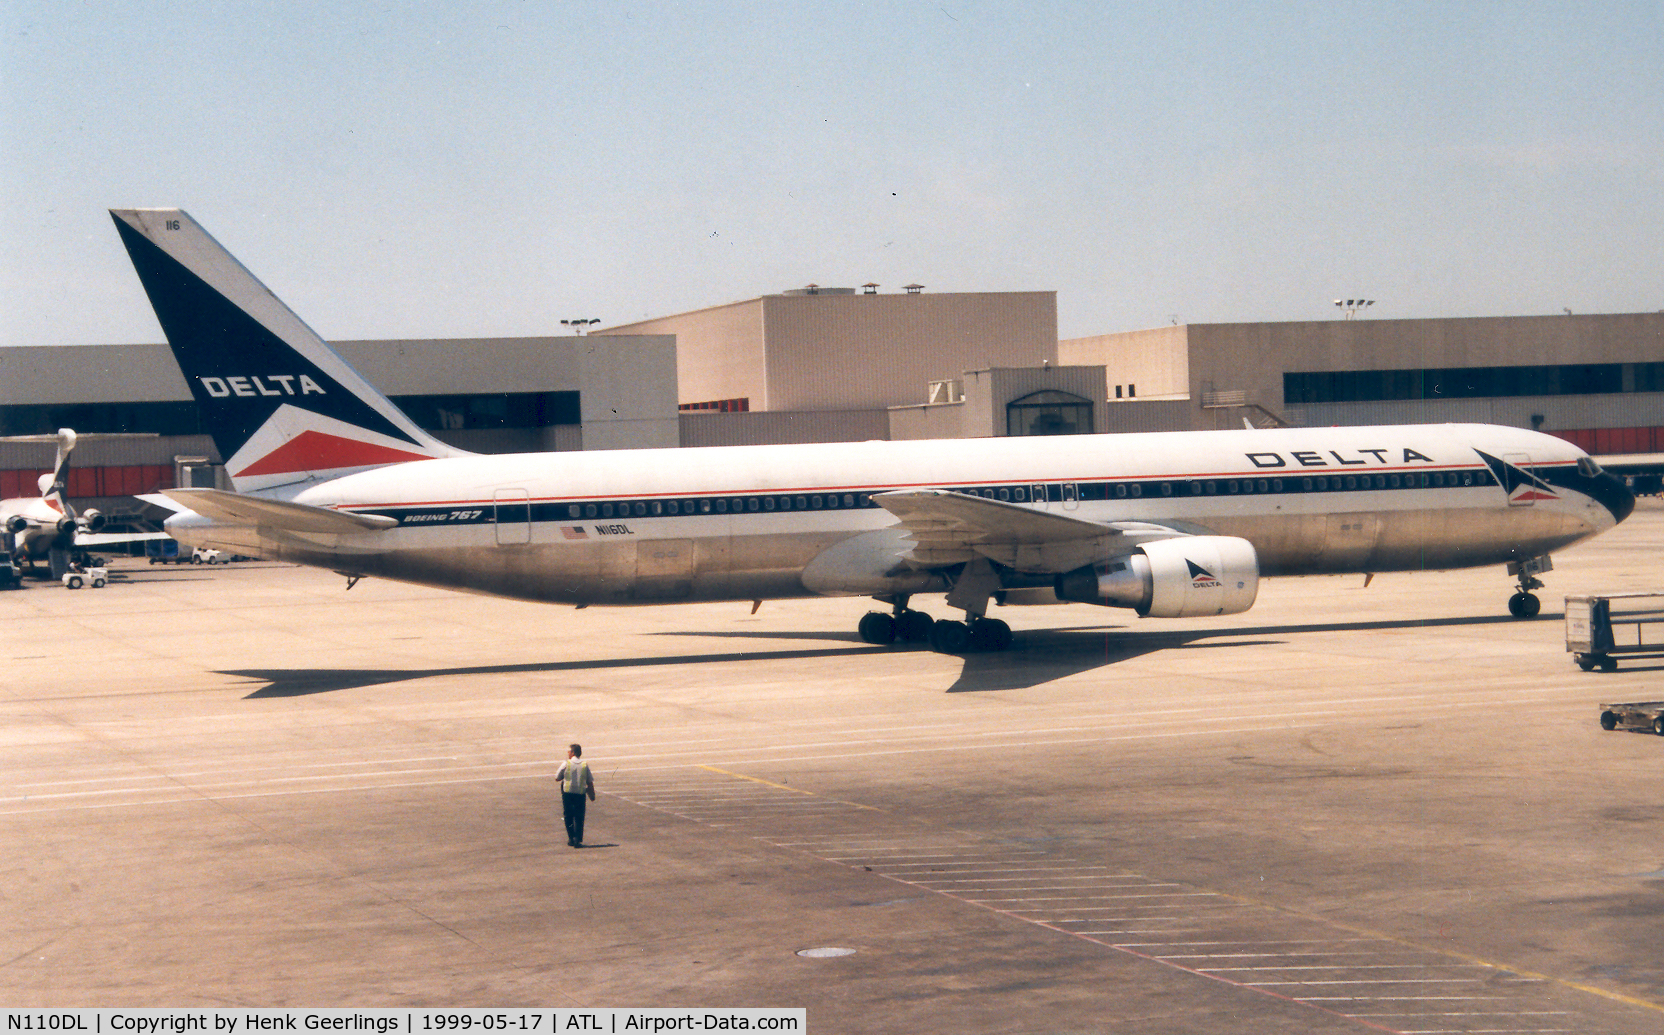 N110DL, 1983 Boeing 767-232 C/N 22222, Delta